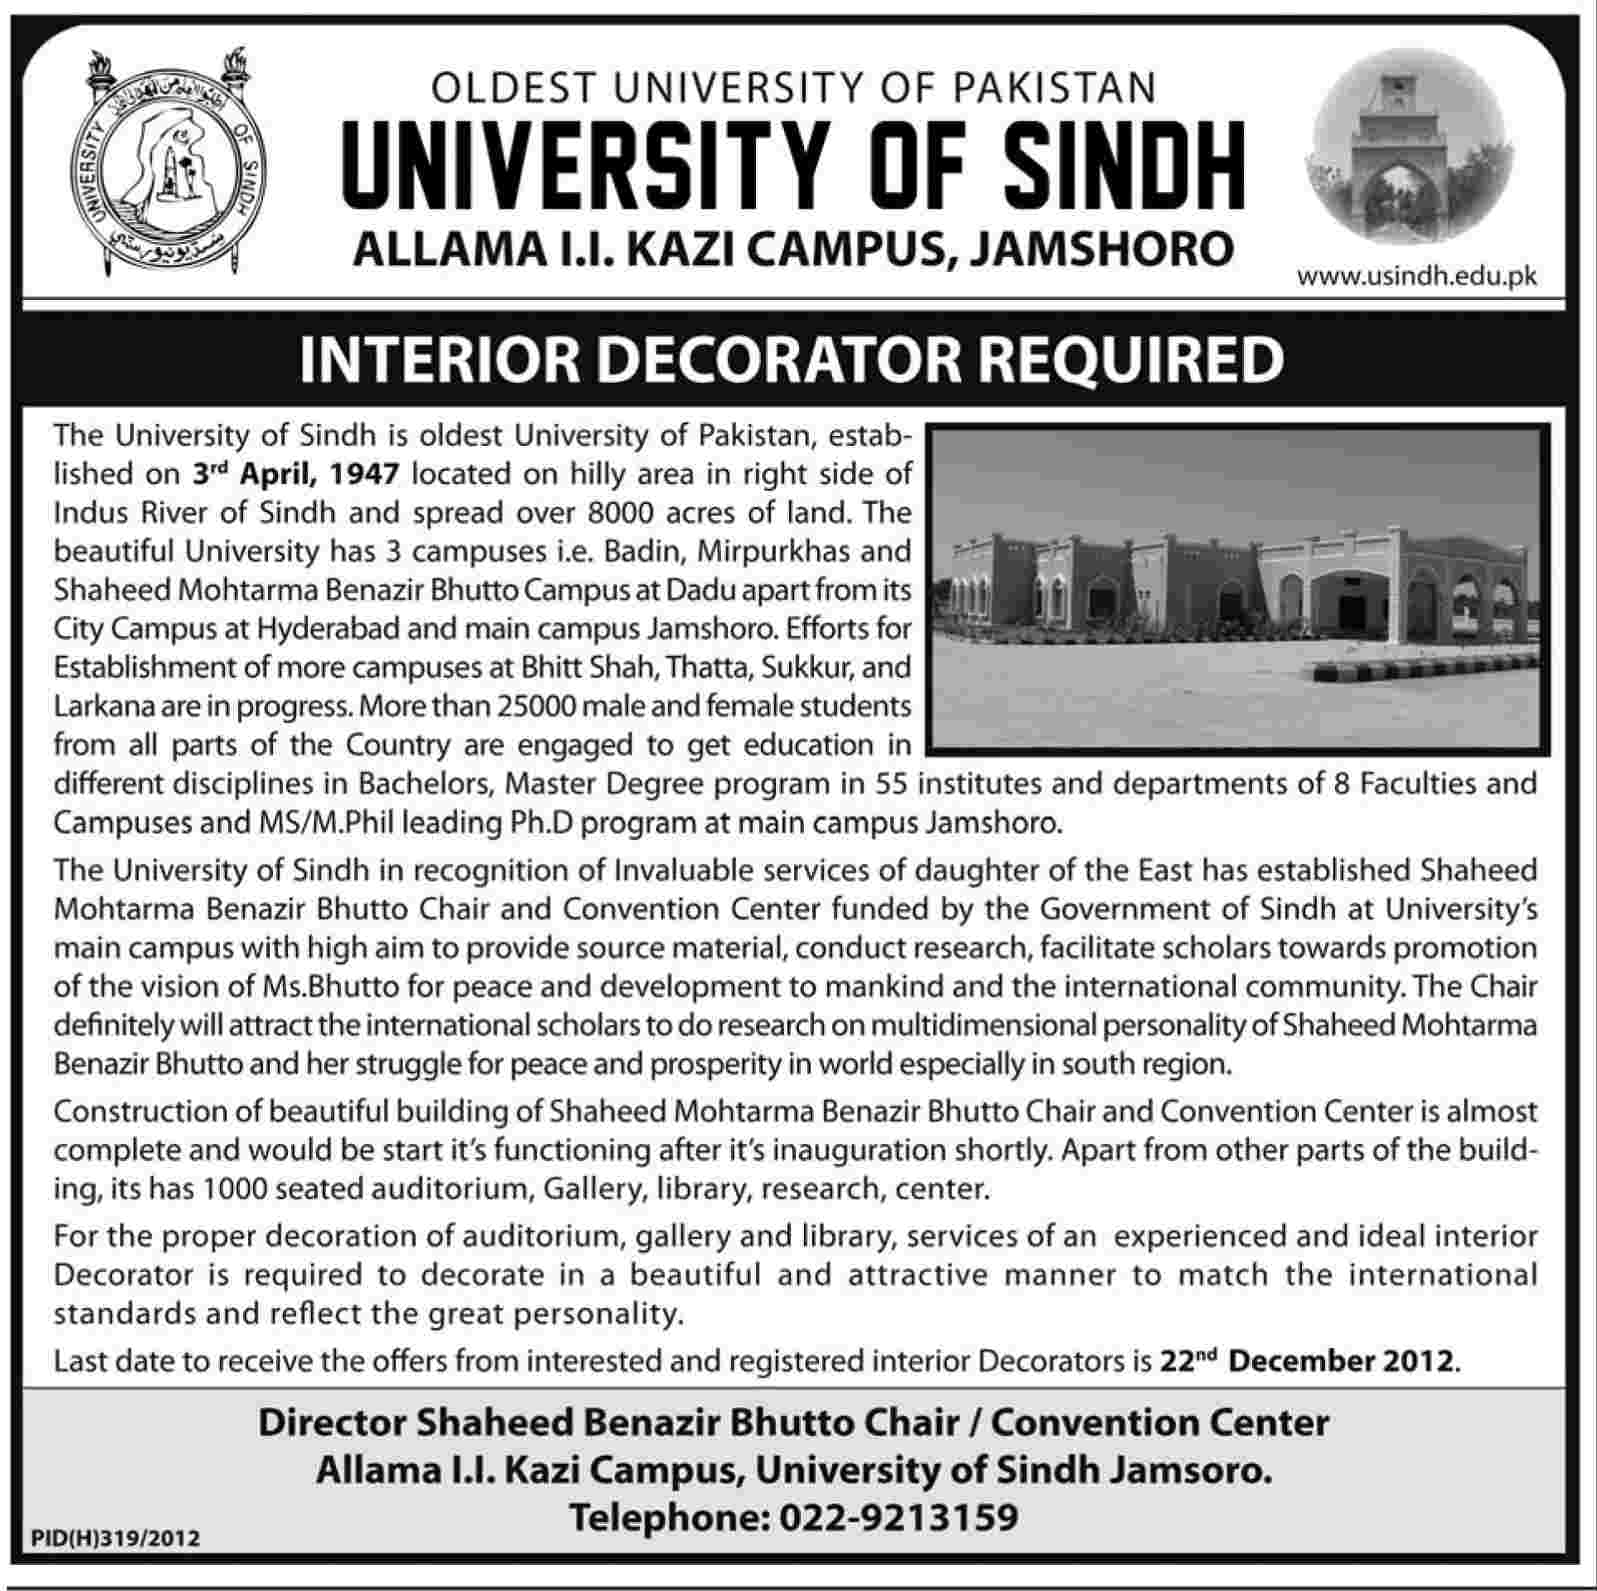 Interior Decorator Vacancy at University of Sindh